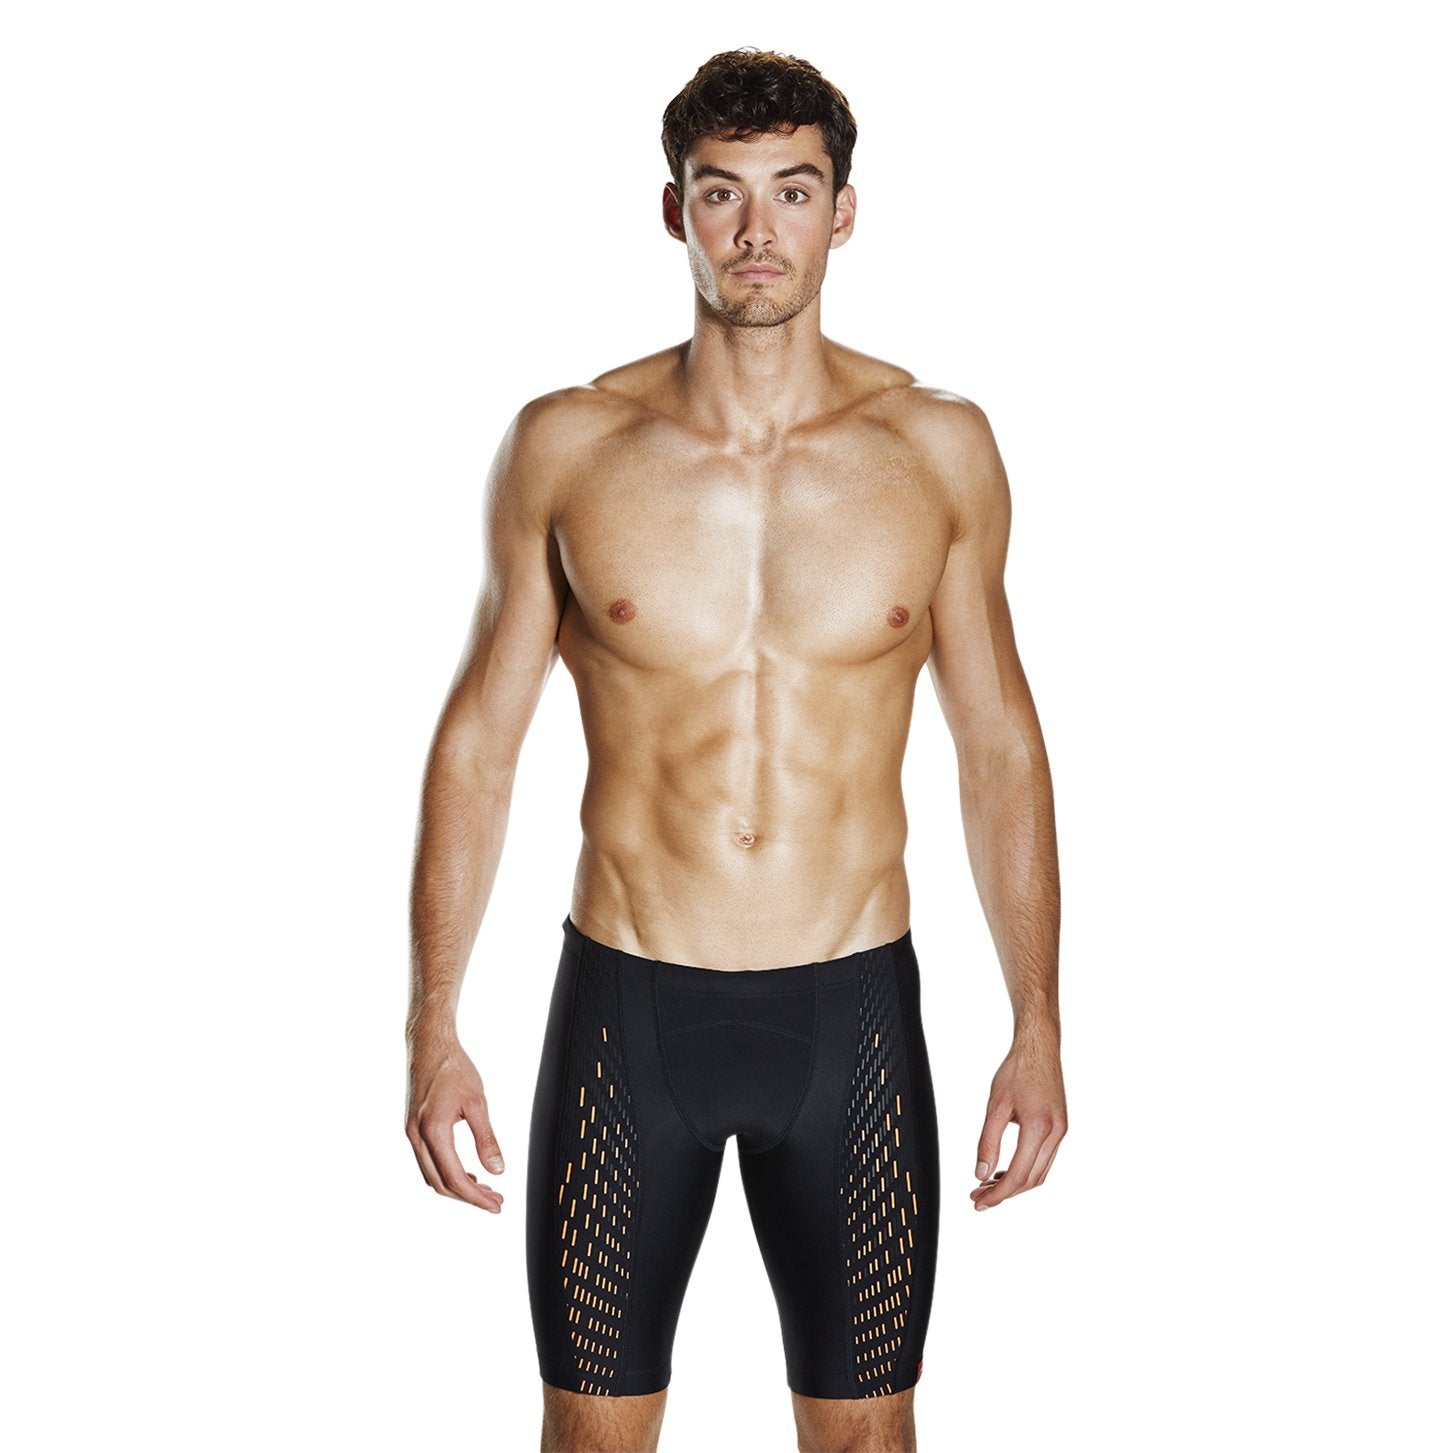 Speedo Male Swimwear Fit Powermesh Pro Jammer - Best Price online Prokicksports.com